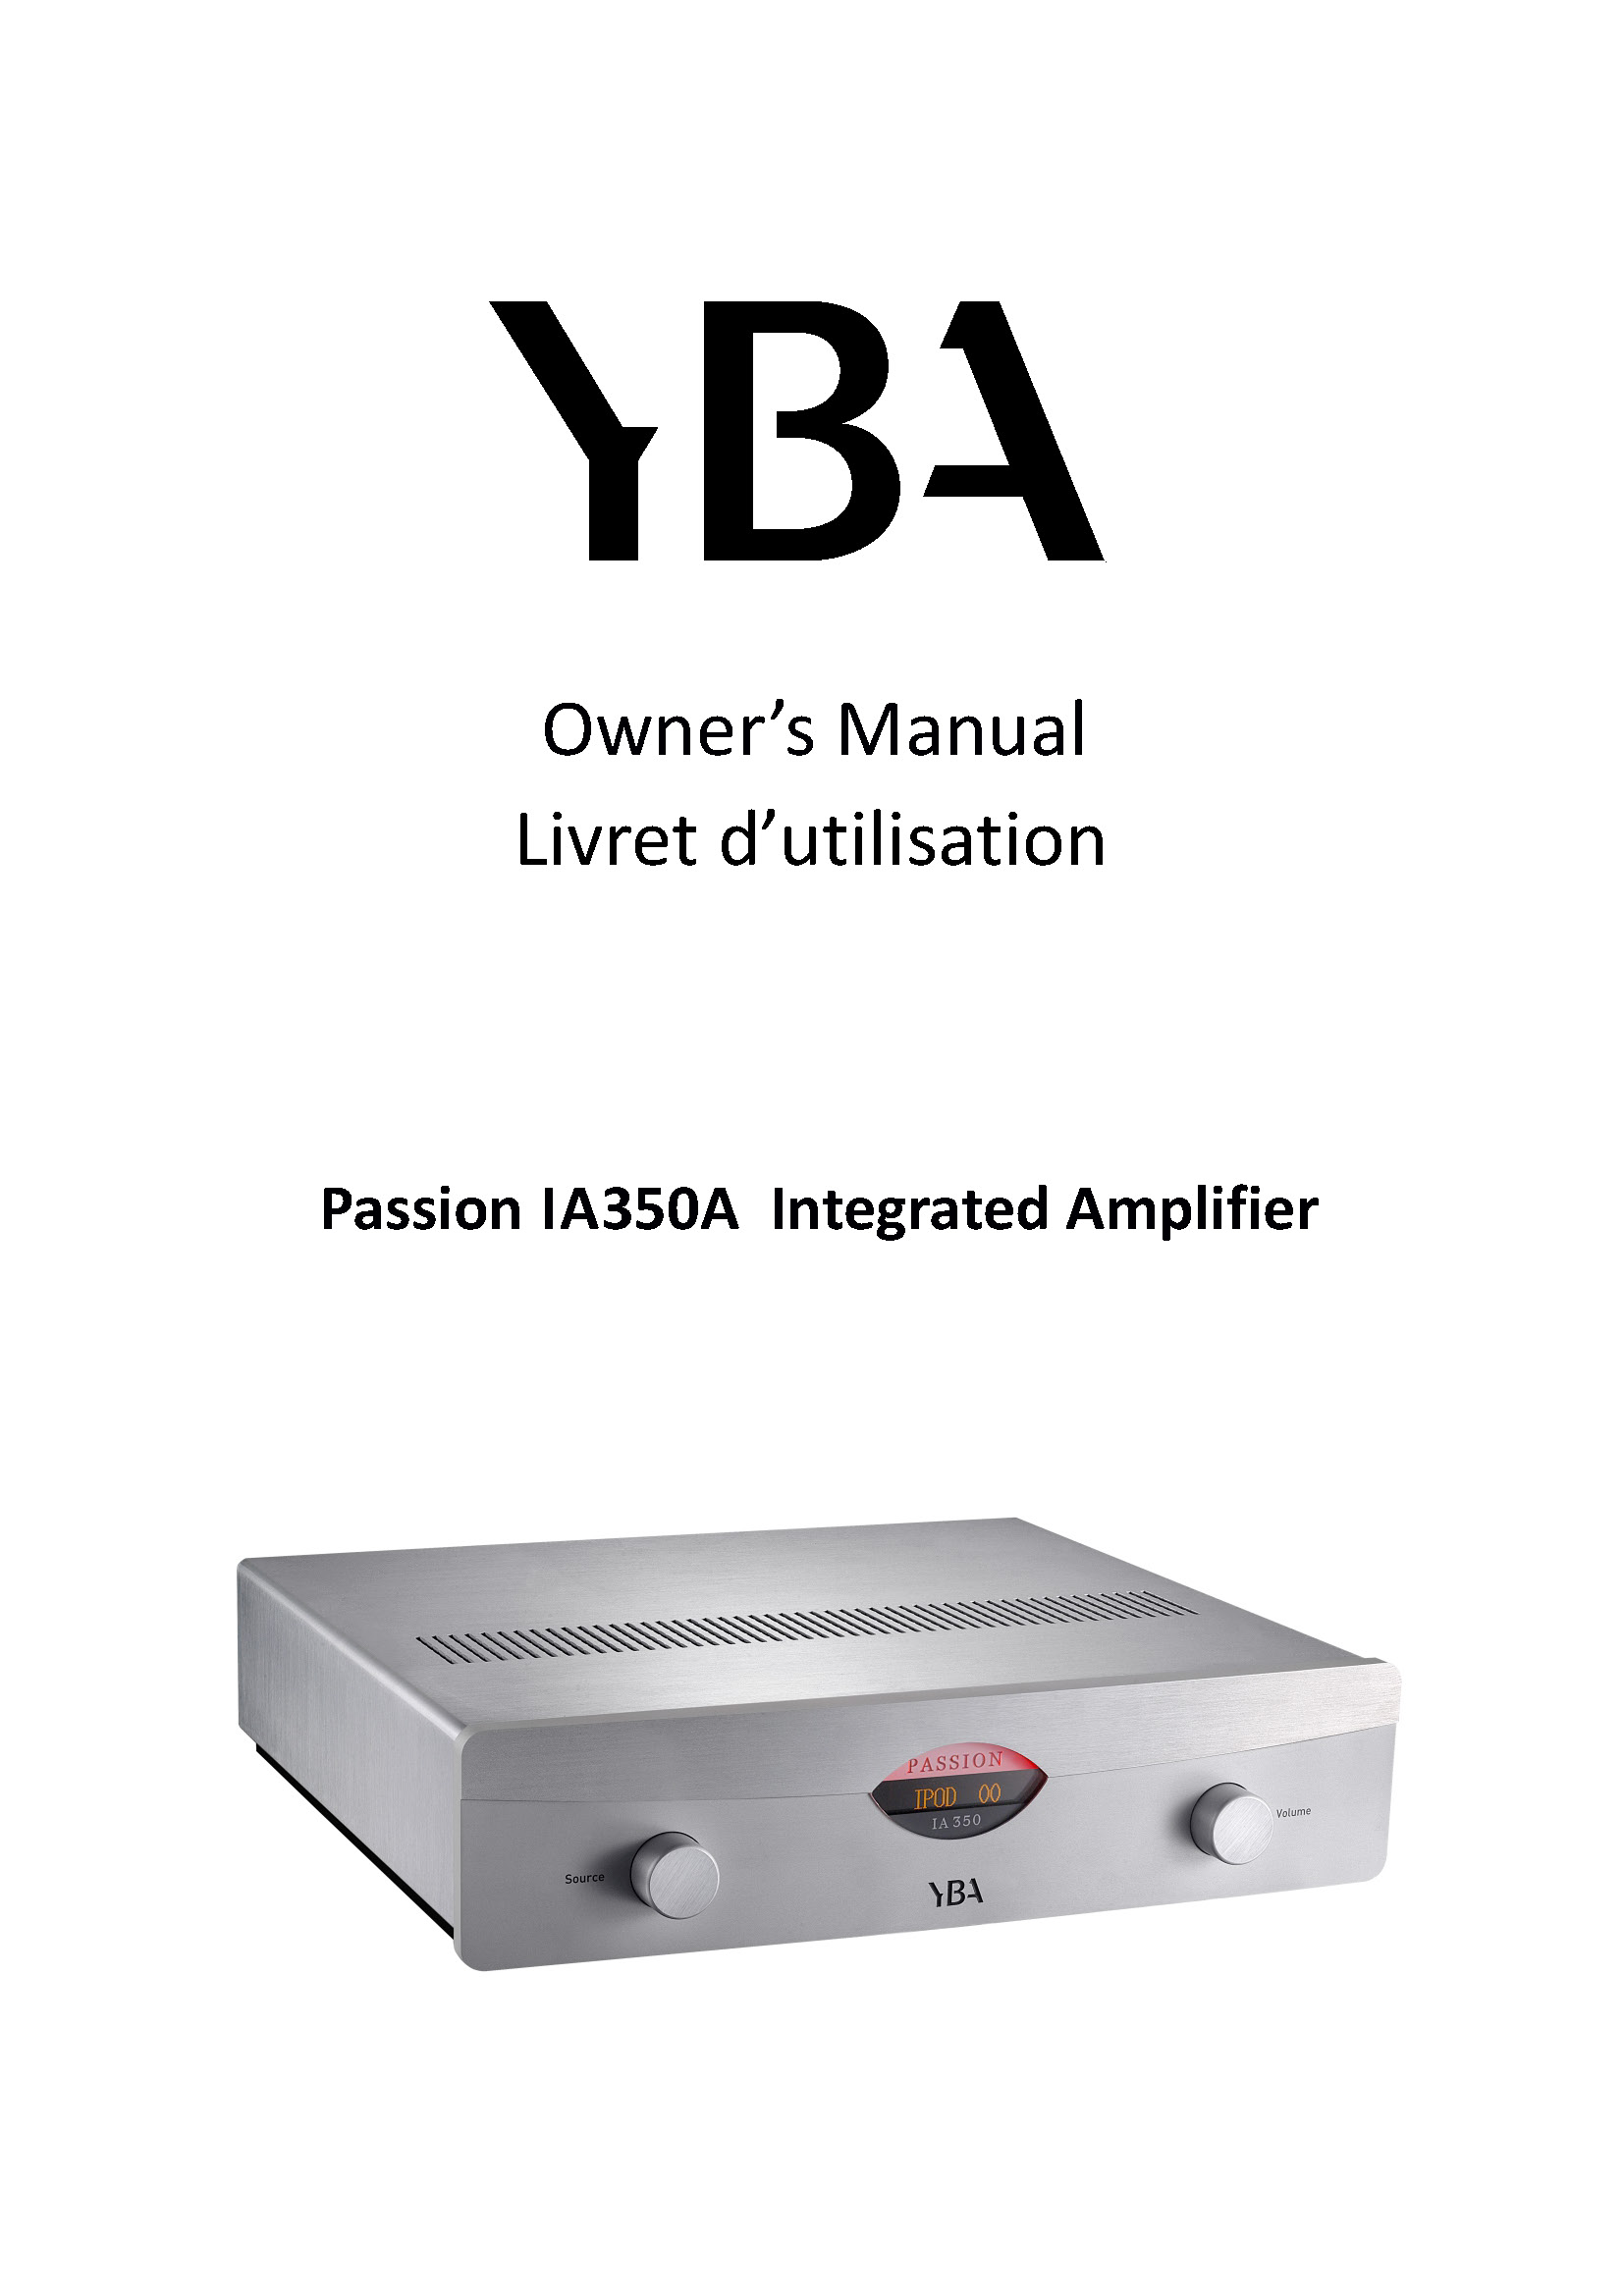 YBA Passion CDT450 And IA350